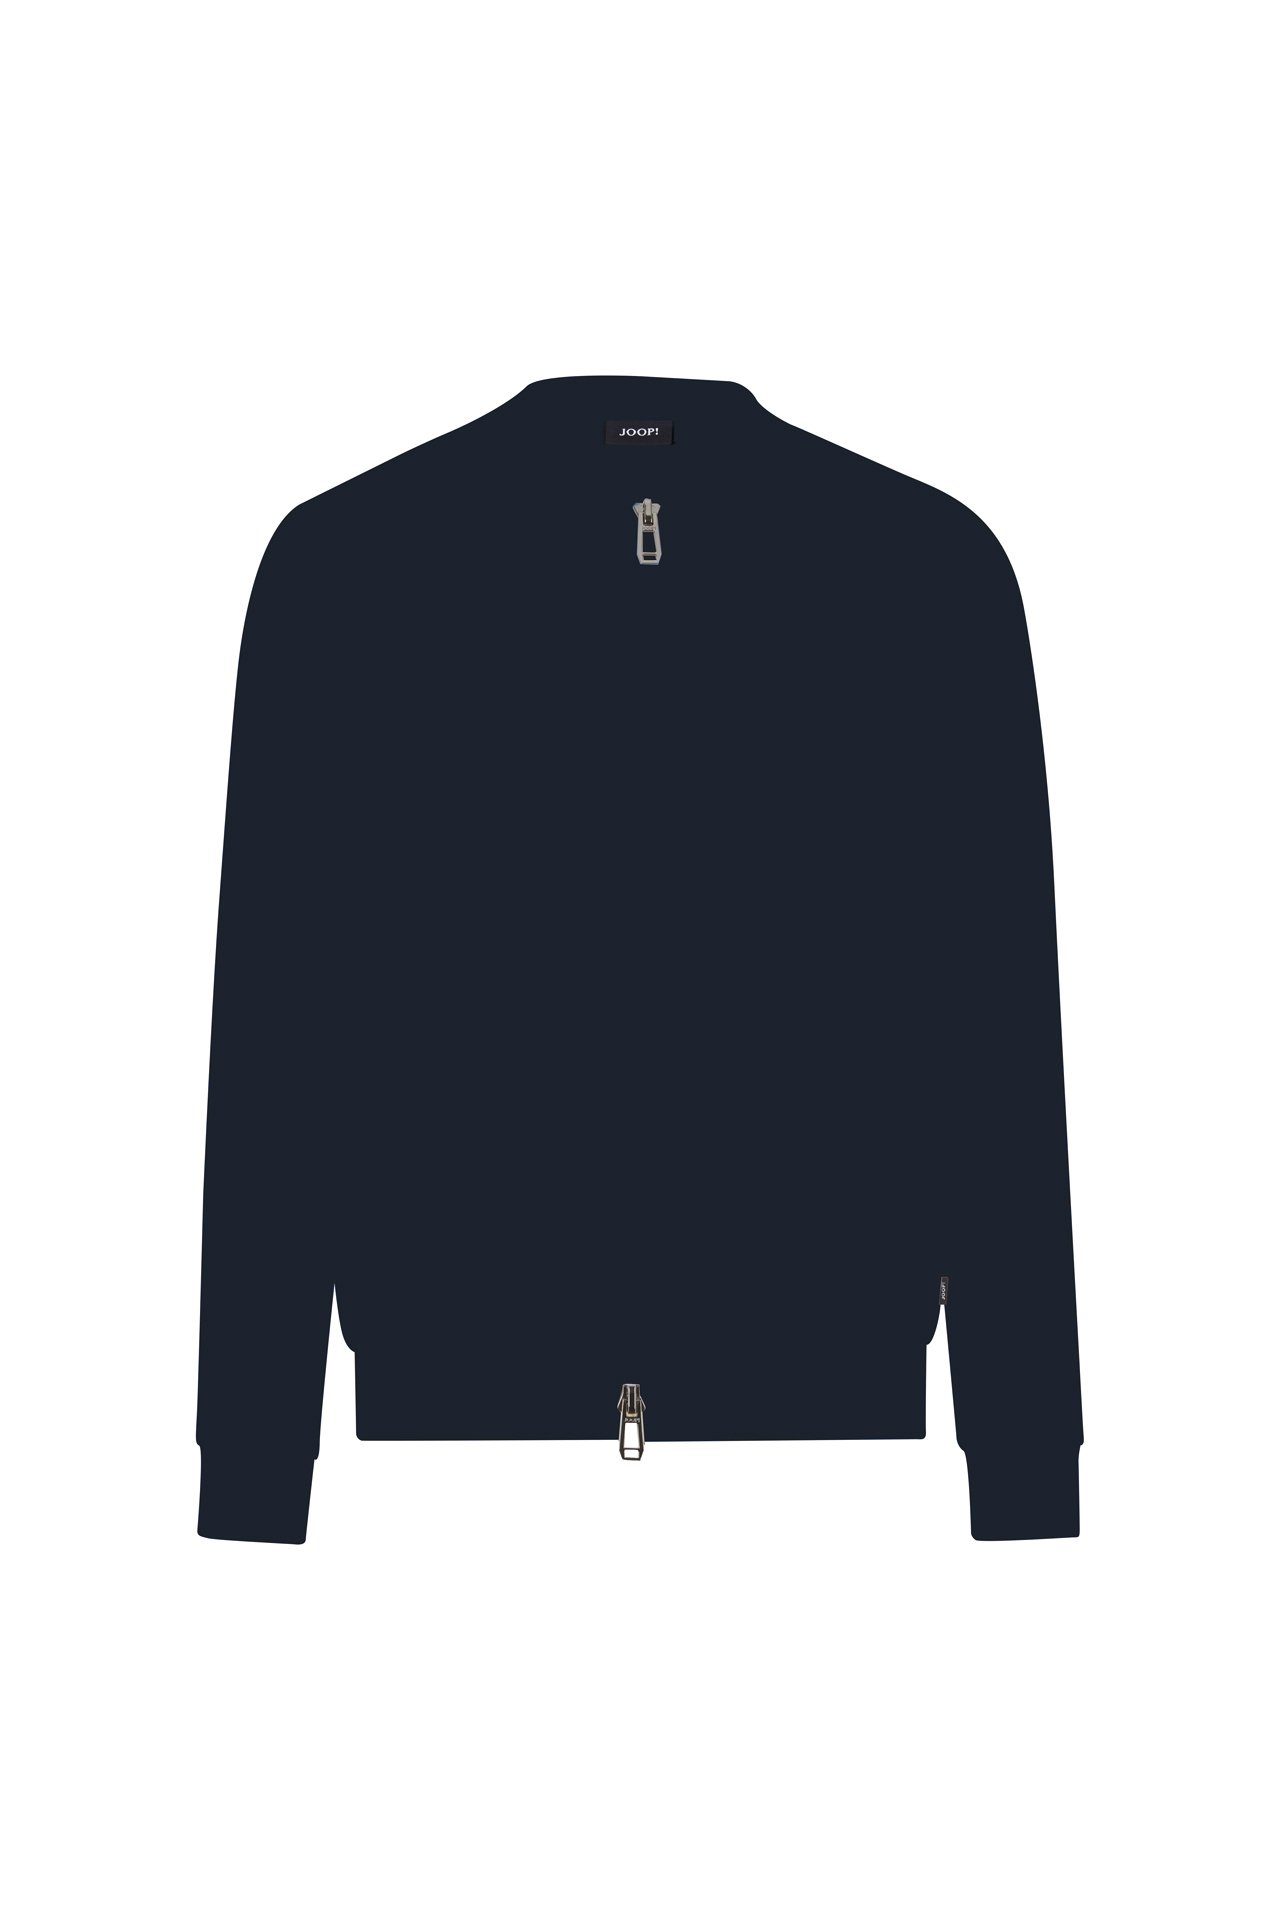 Joop! Sweatshirt »Herren Jersey-Jacke - JJ-18Samir, Baseball-Kragen,«  online kaufen | OTTO